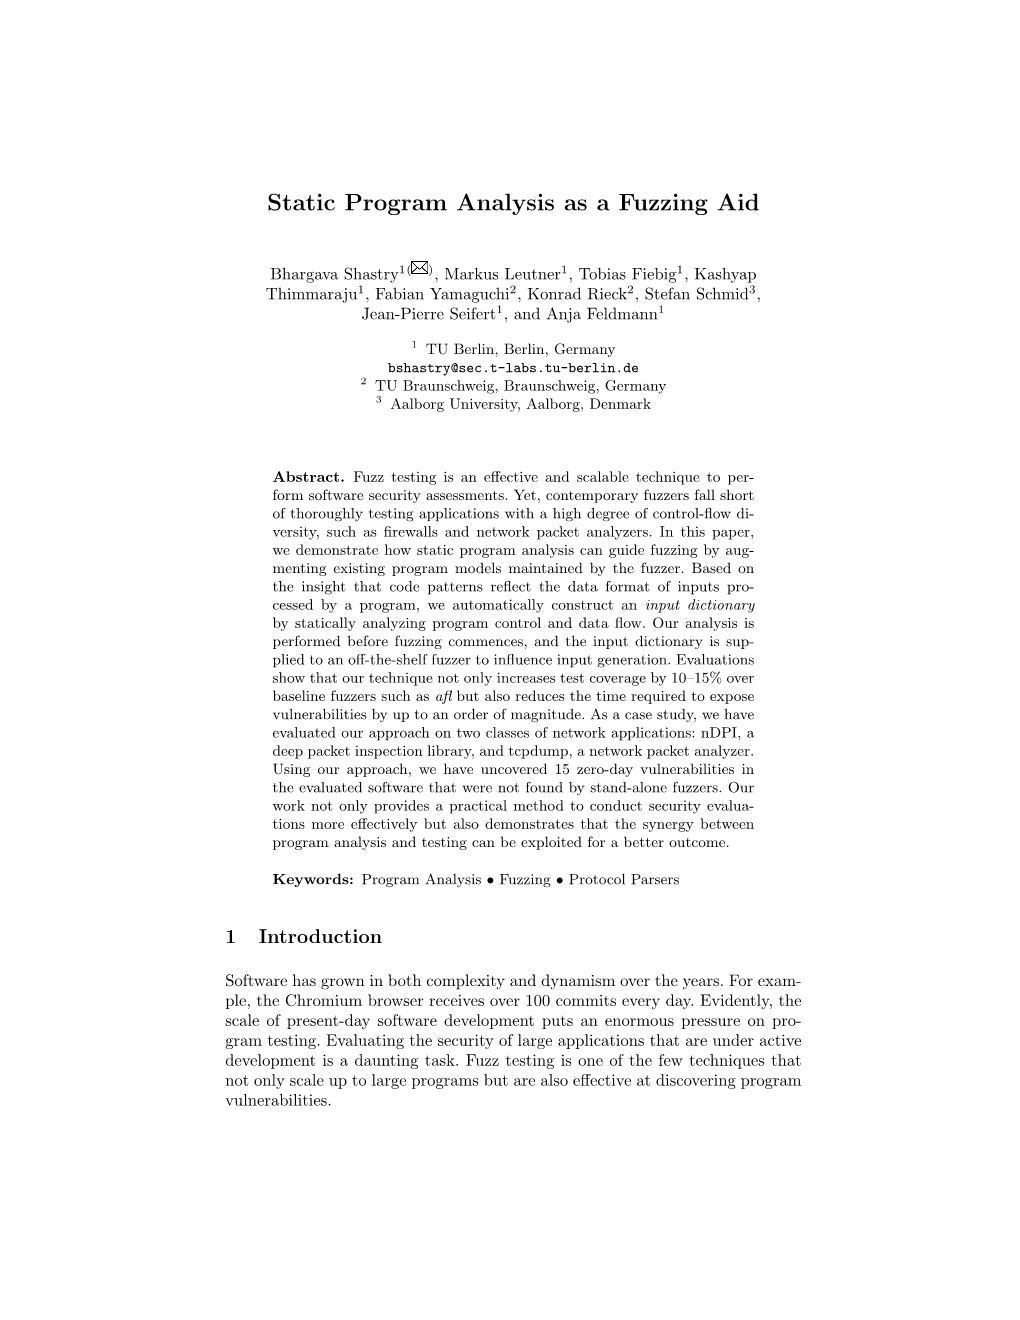 Static Program Analysis As a Fuzzing Aid